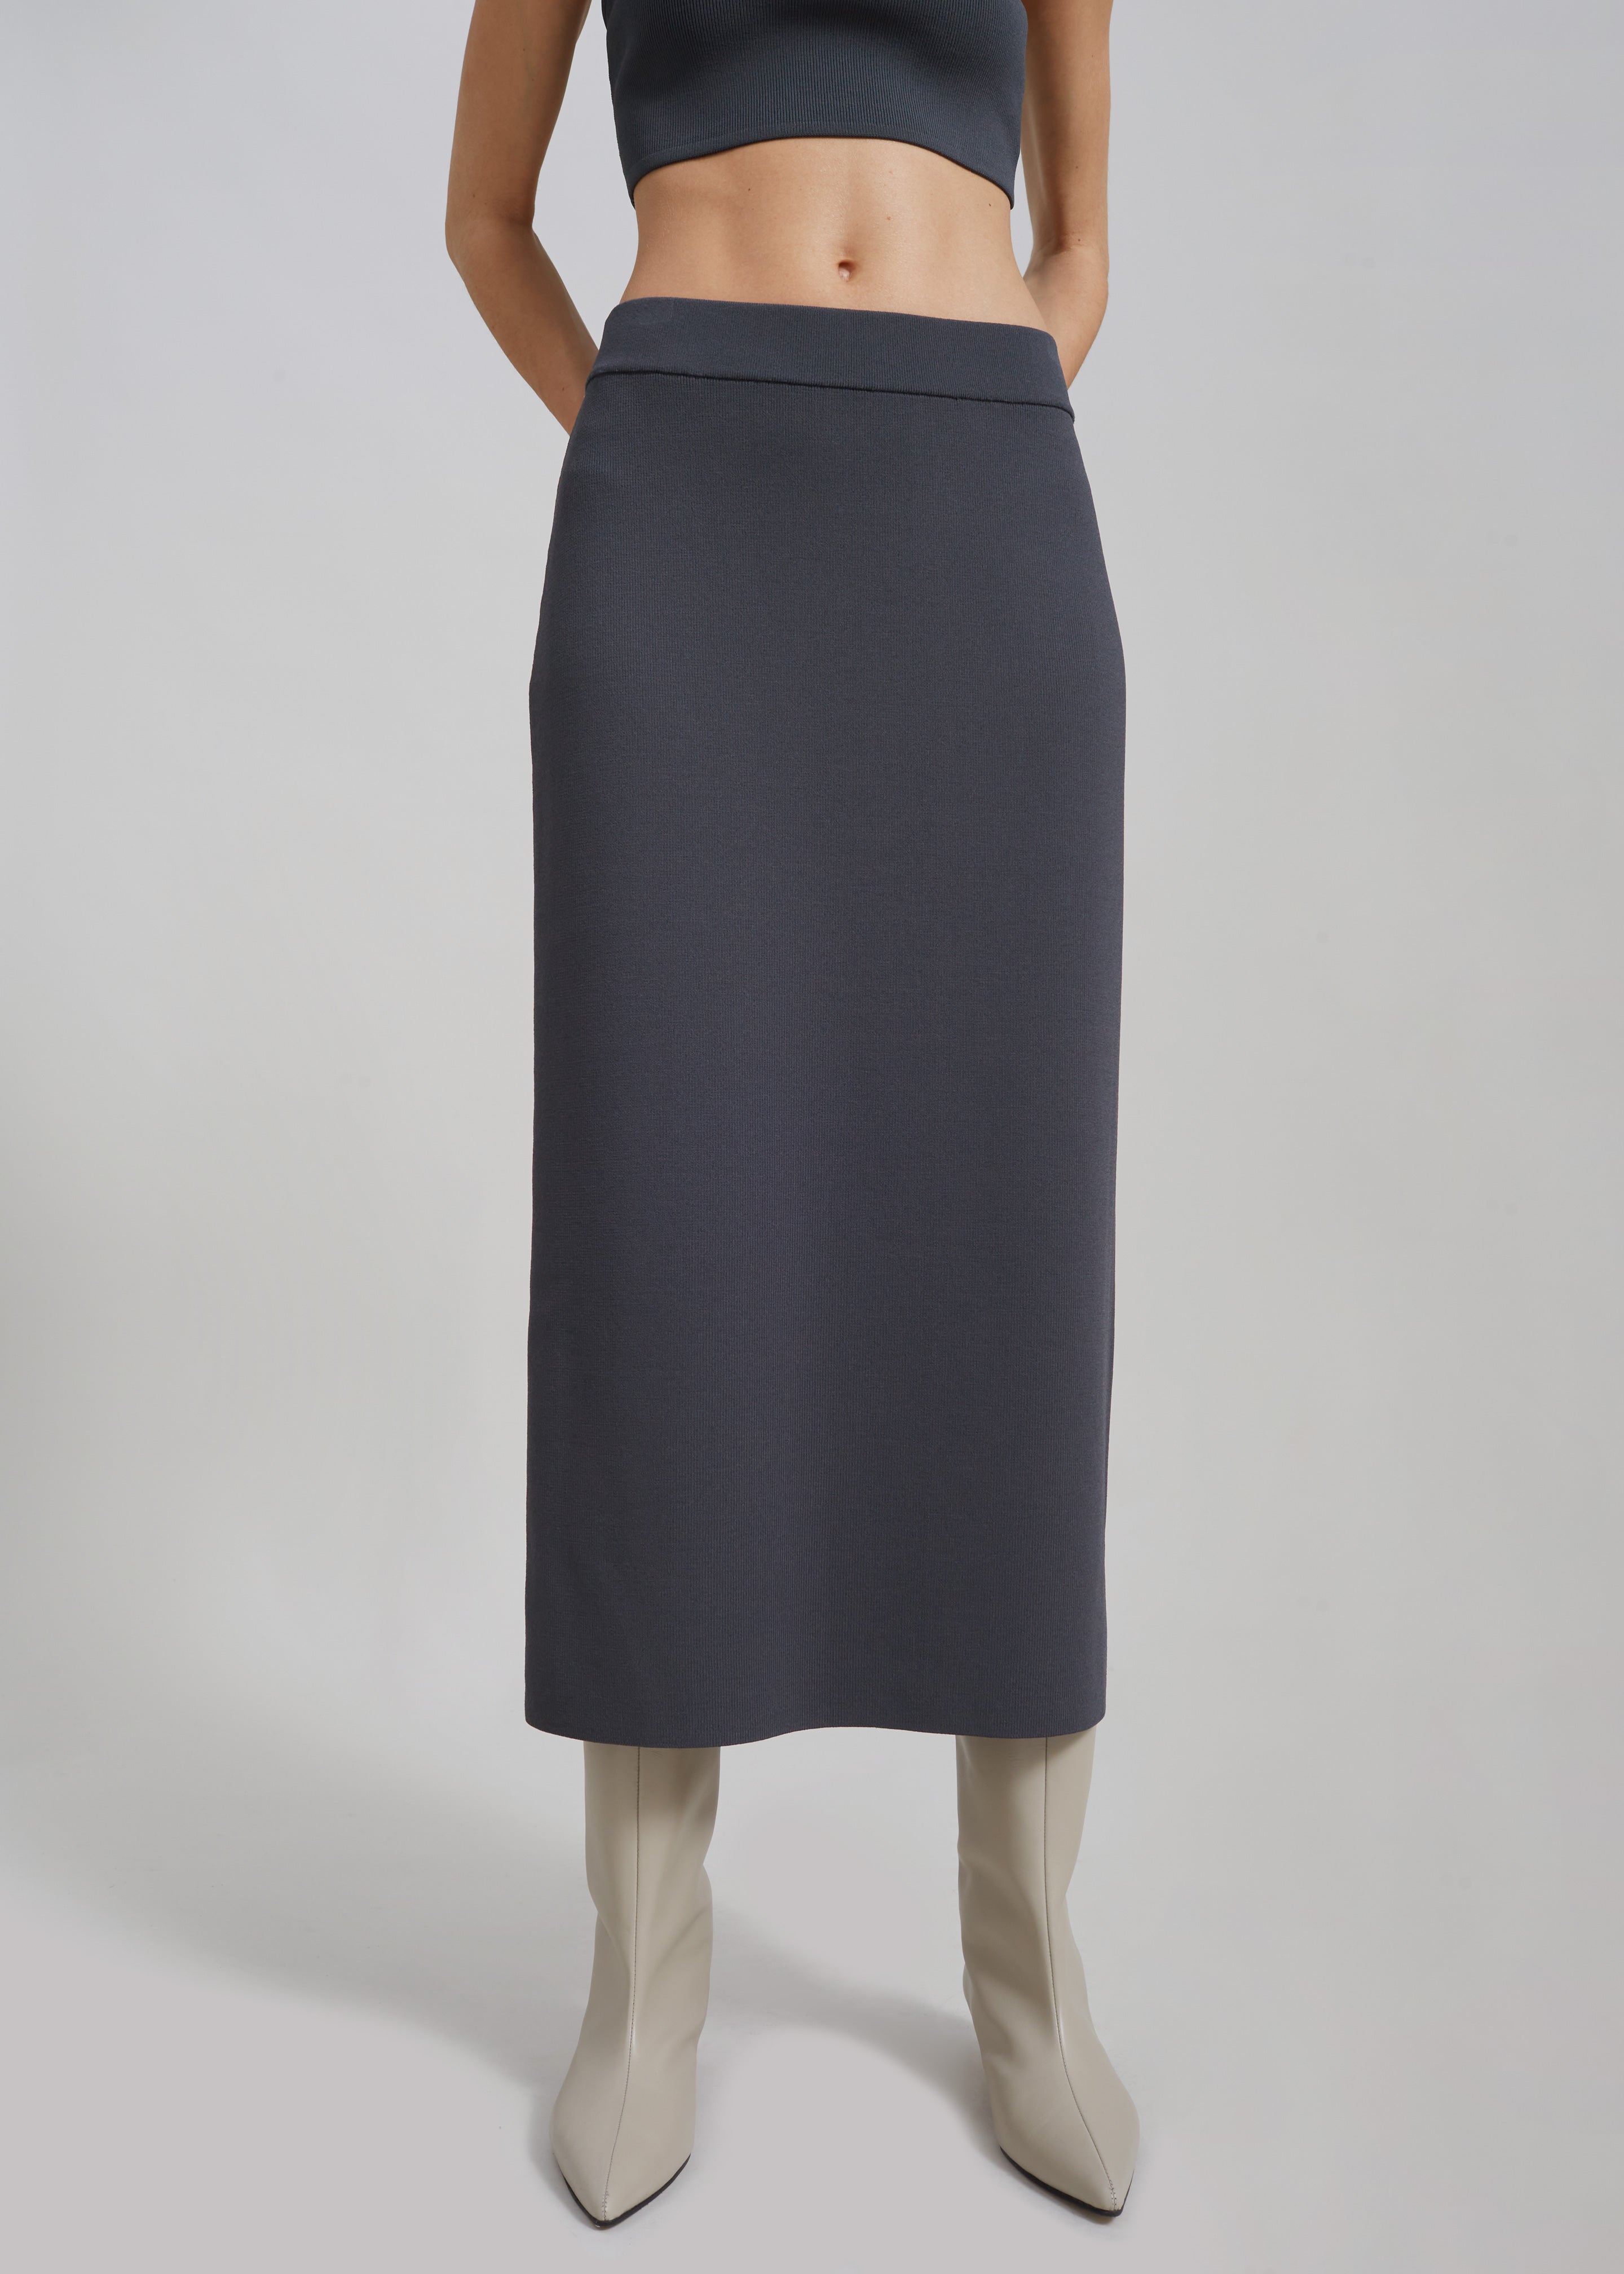 Solange Knit Pencil Skirt - Grey - 4